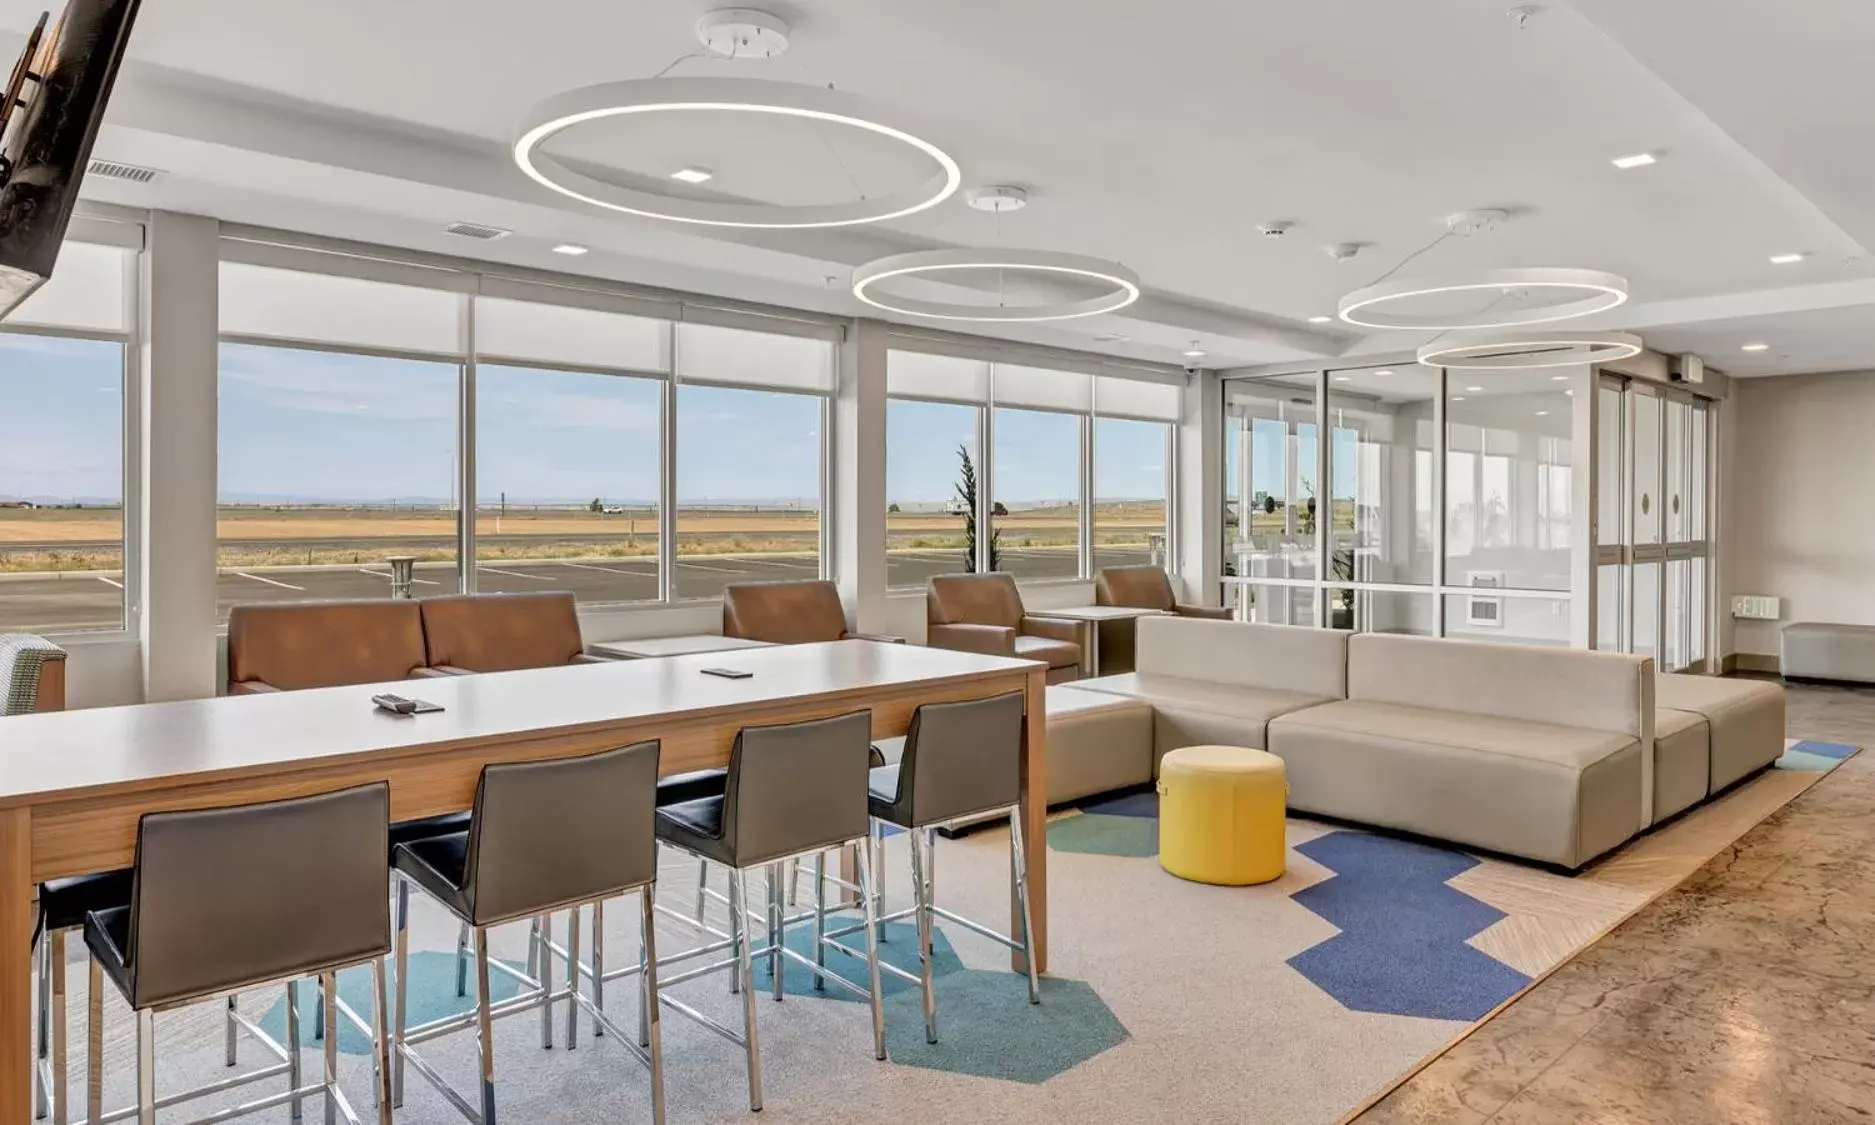 Lobby or reception in Microtel Inn & Suites by Wyndham George